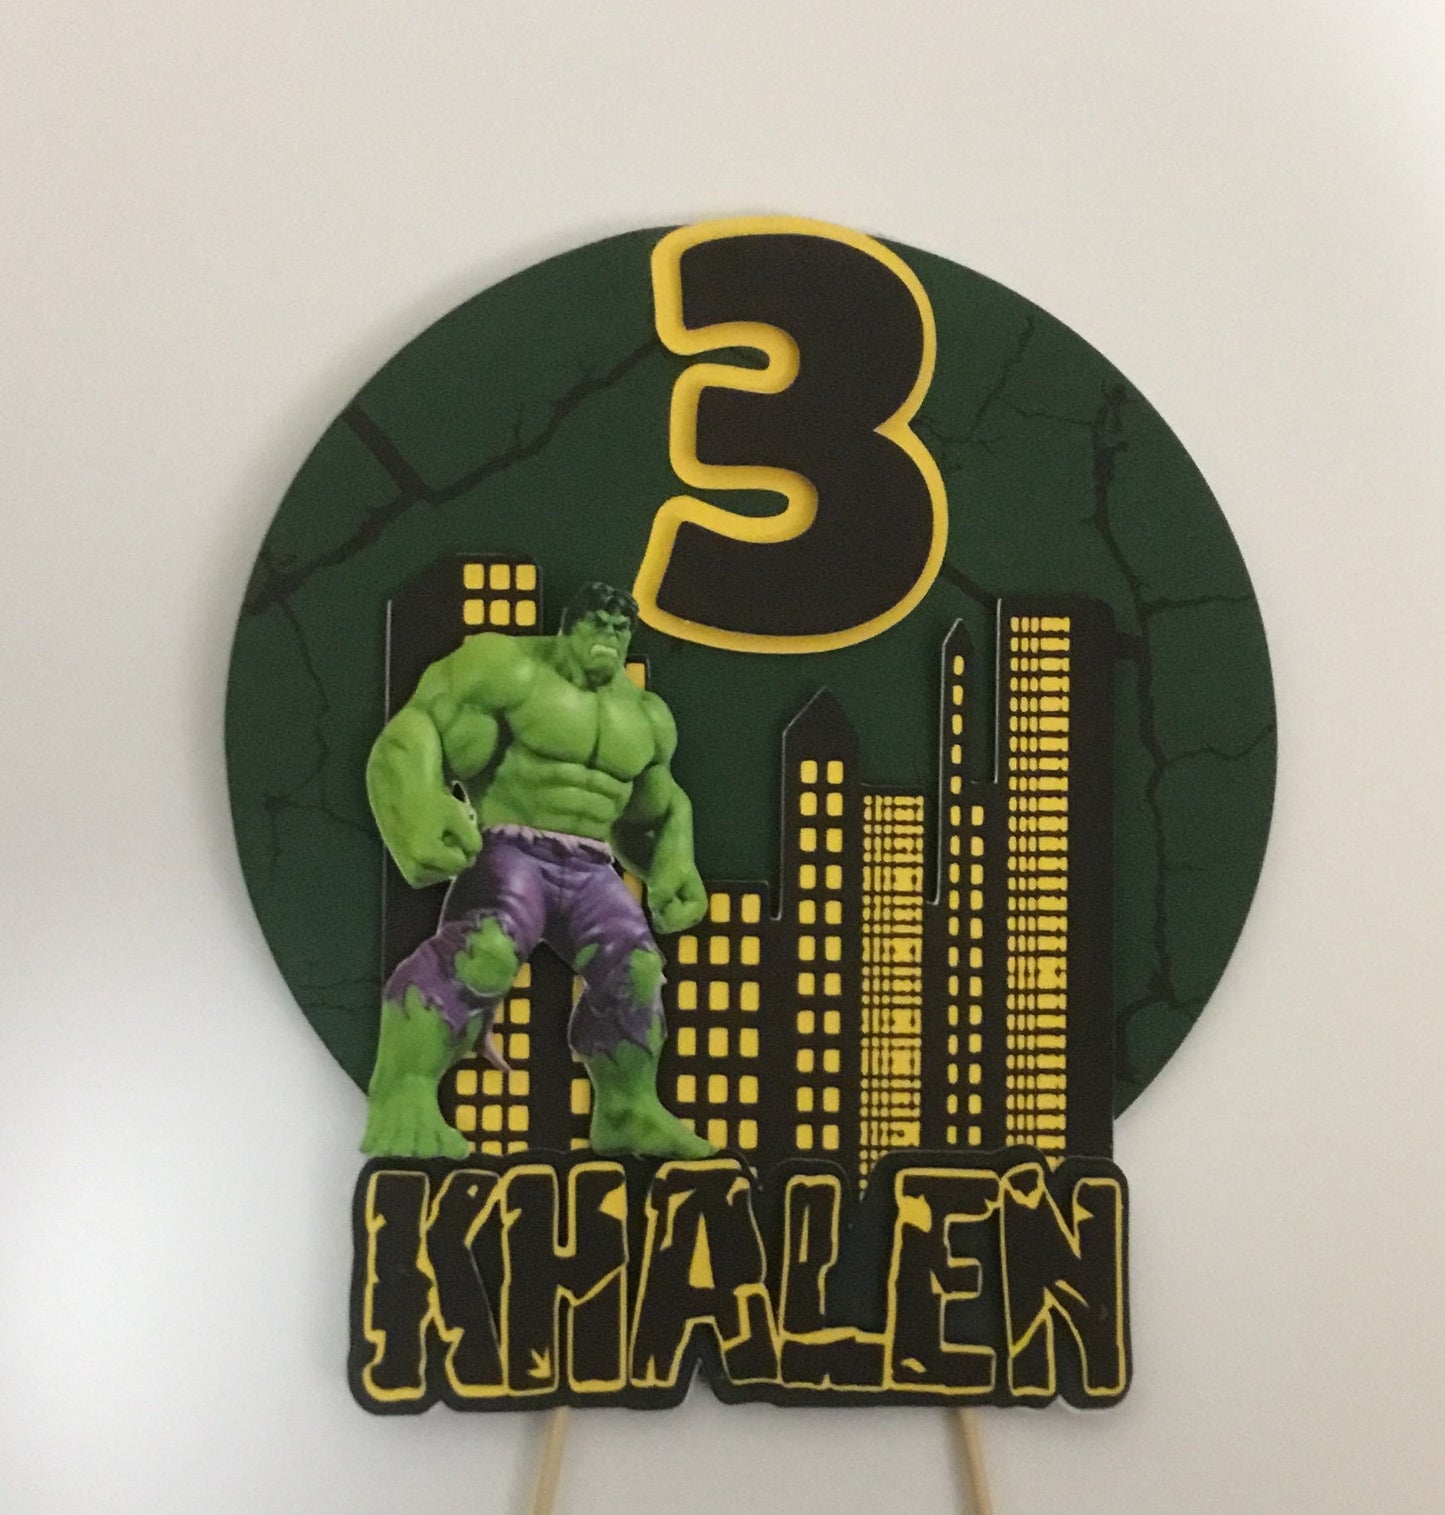 Incredible Hulk Cake Topper/ Personalized Super hero Topper